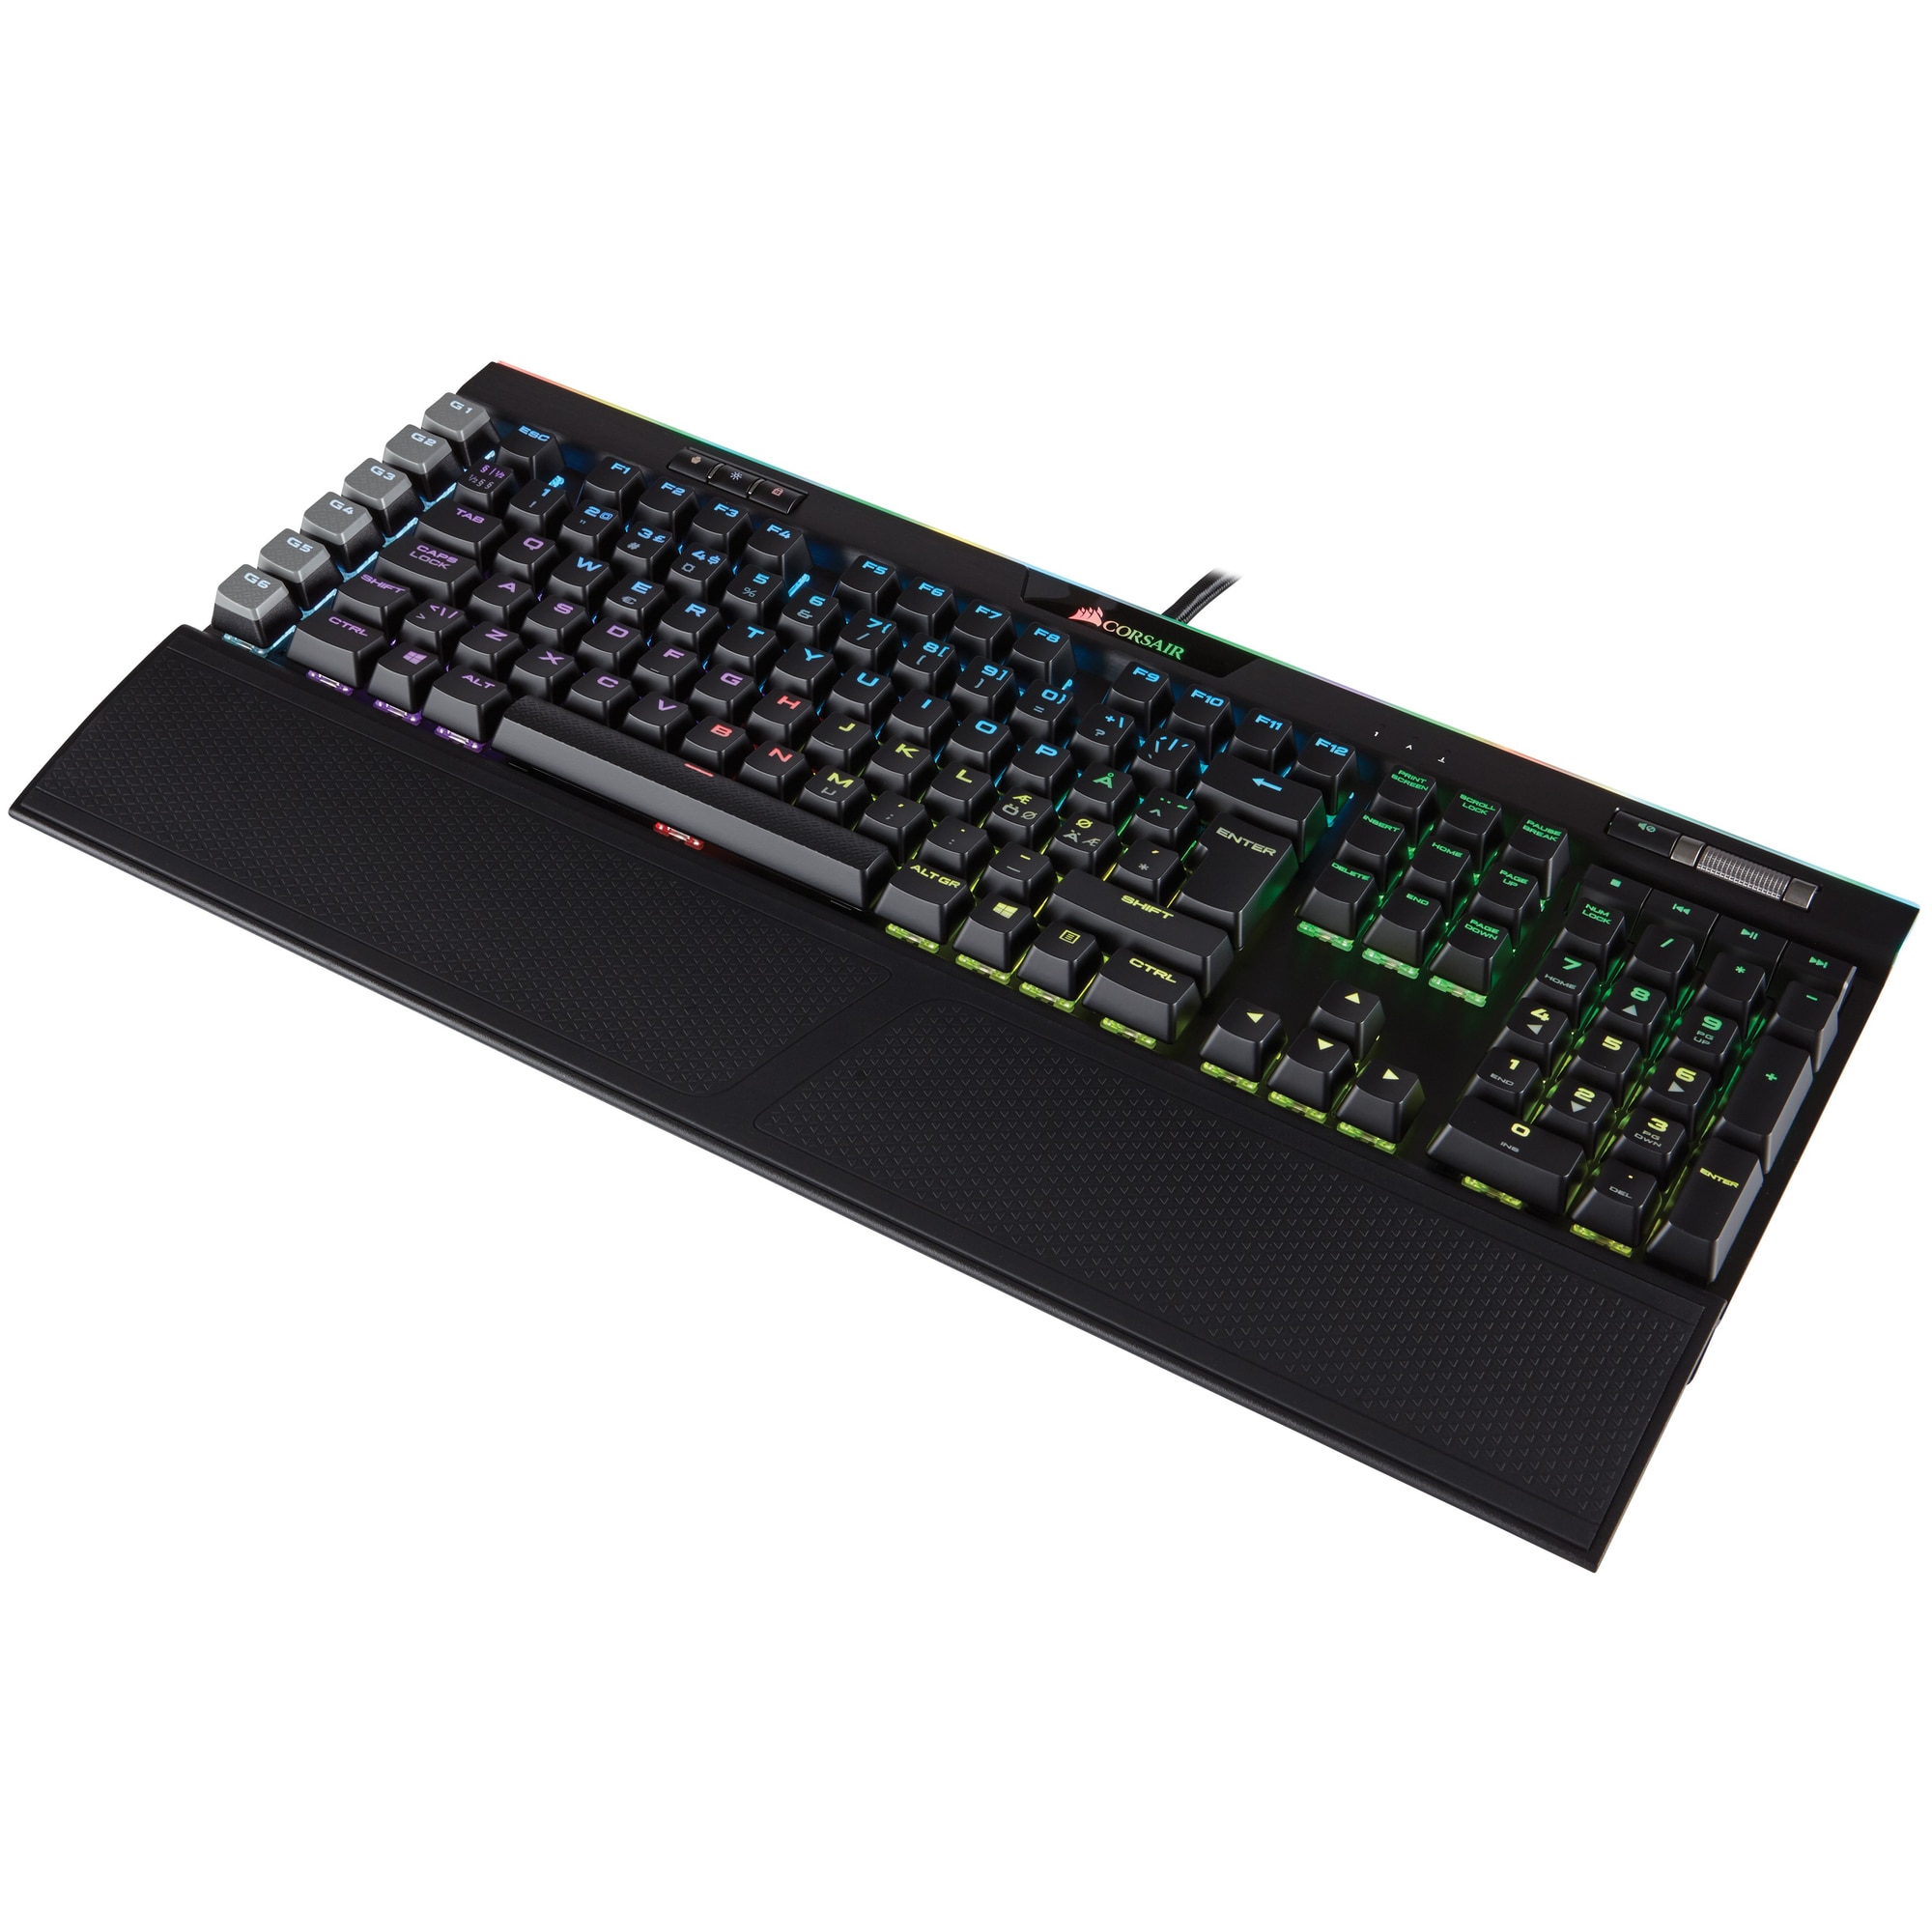 Corsair K95 RGB Platinum Speed gamingtastatur - Elkjøp